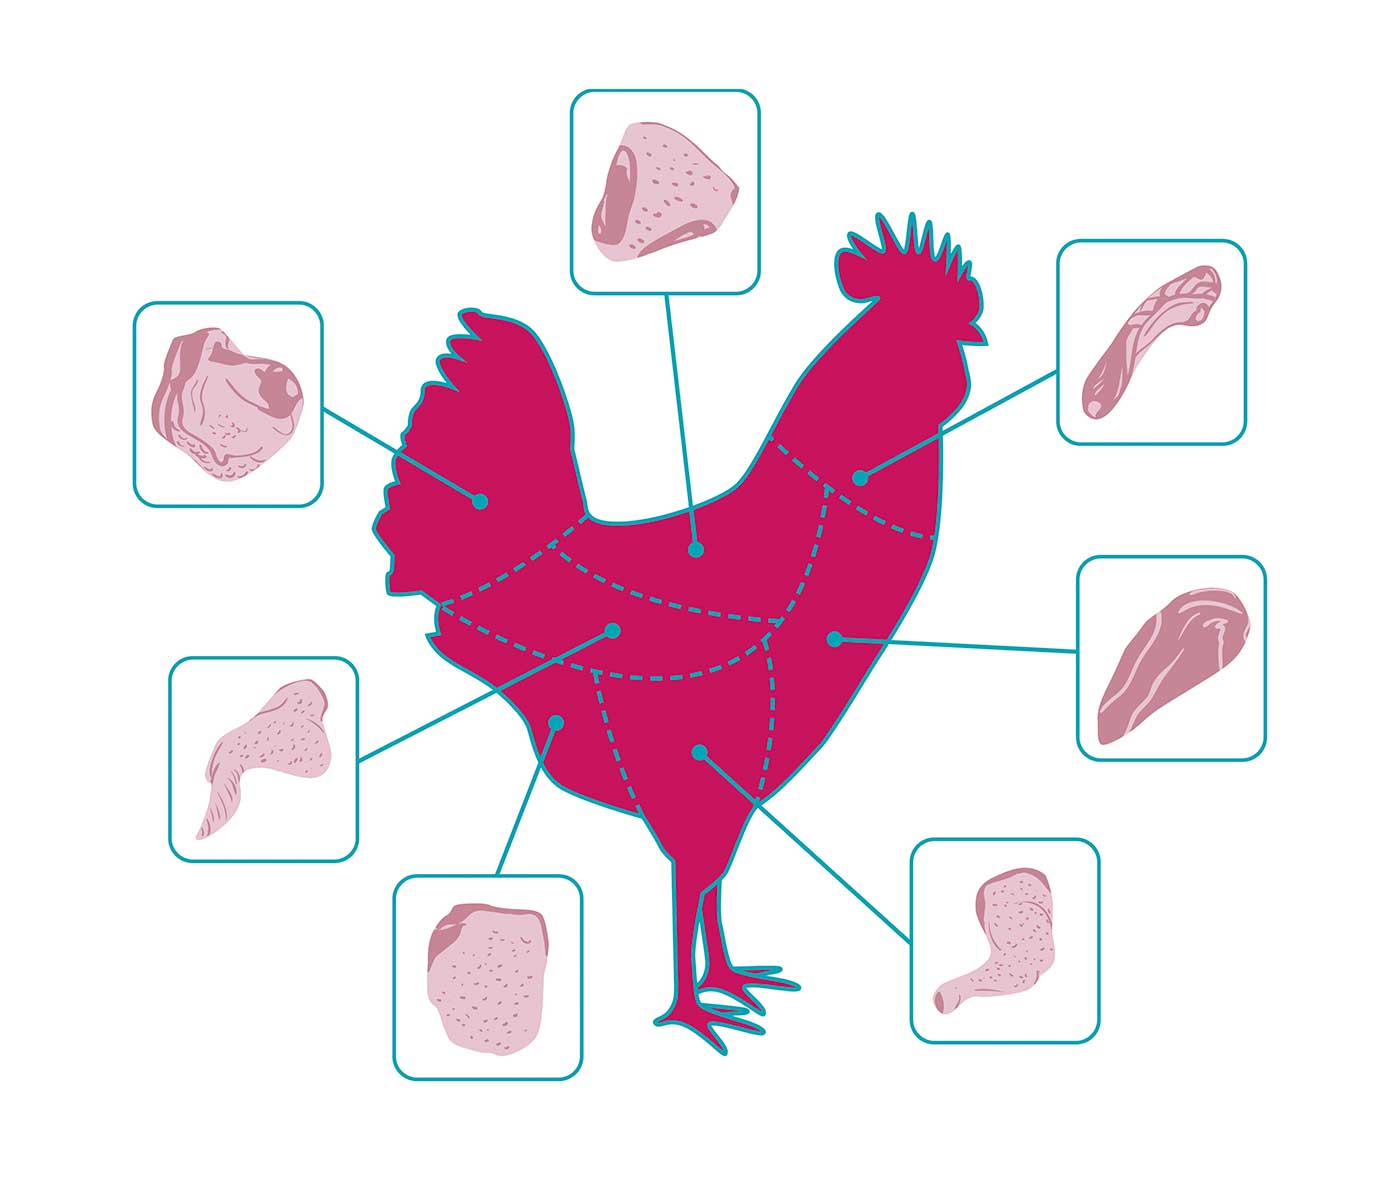 Problemas de calidad: Miopatías en pollos